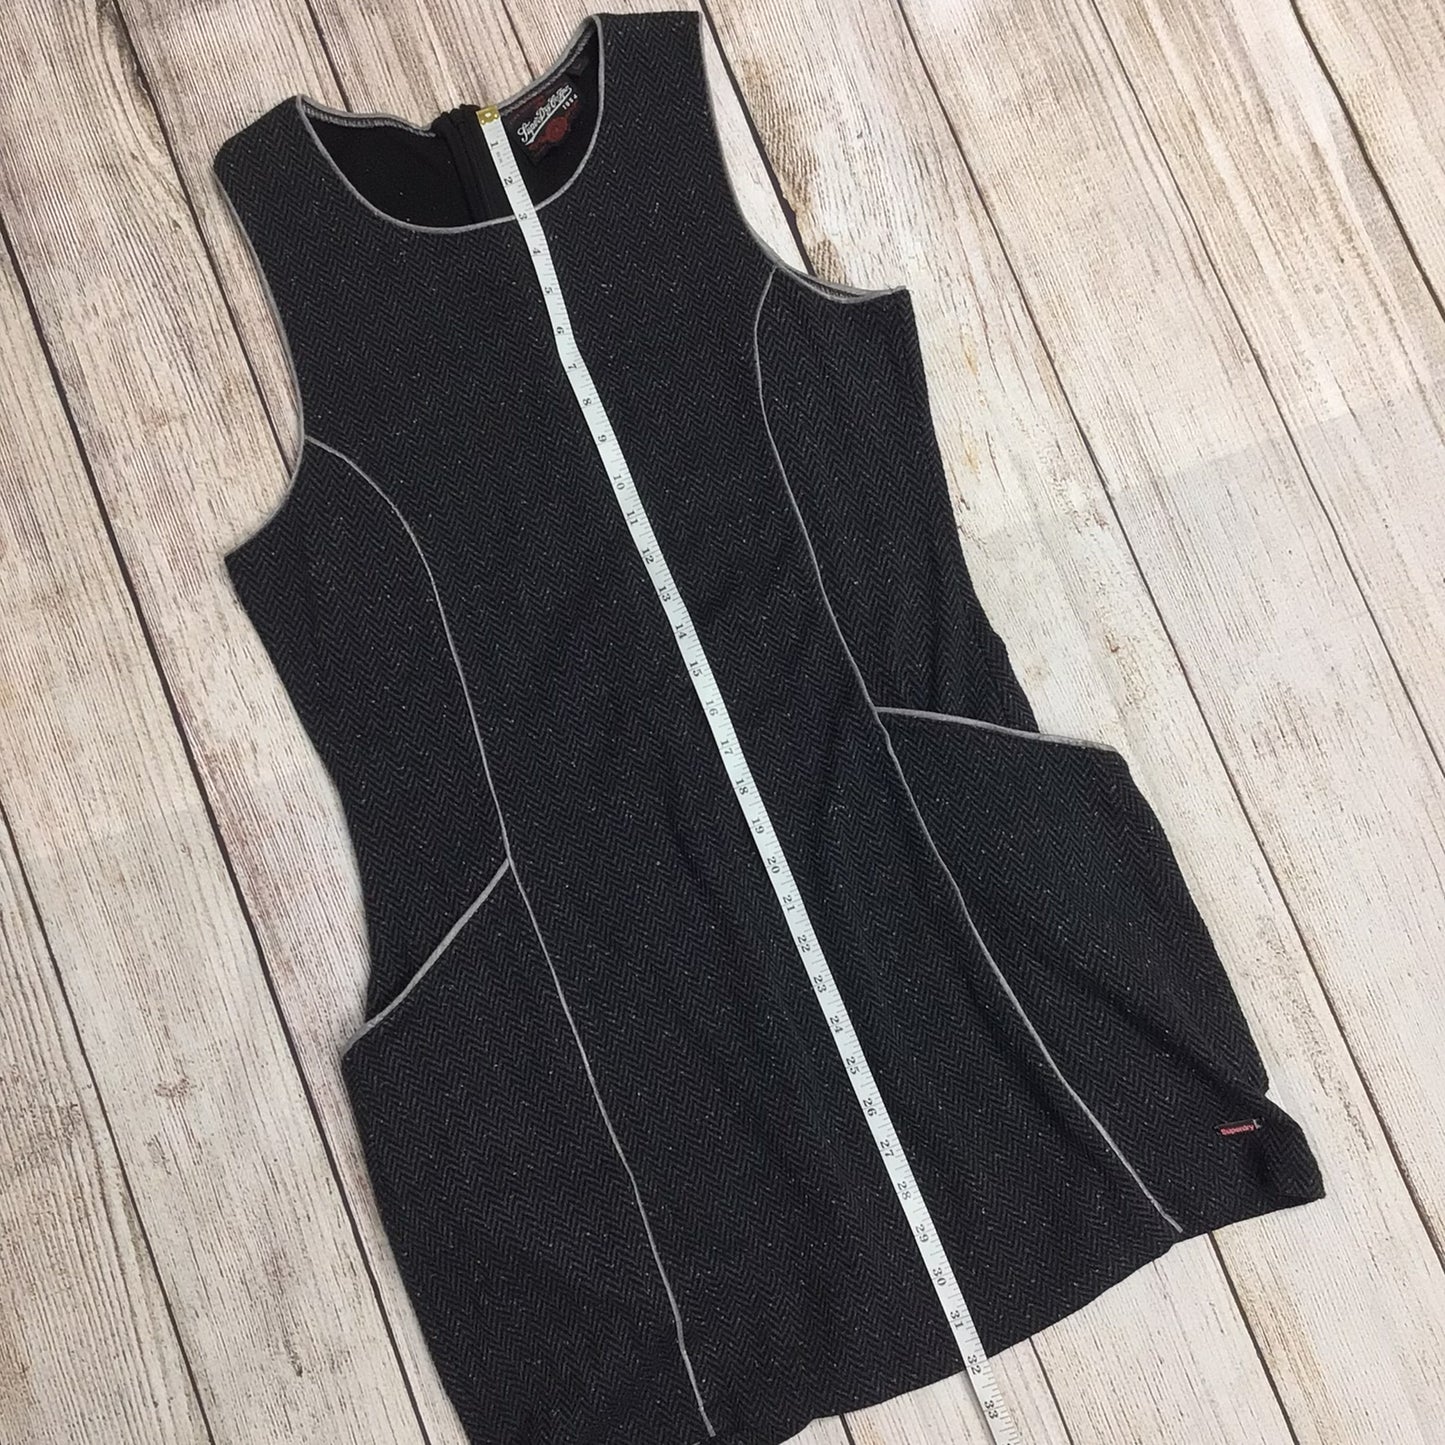 Superdry Black & Grey Jersey Dress w/Pockets Size L